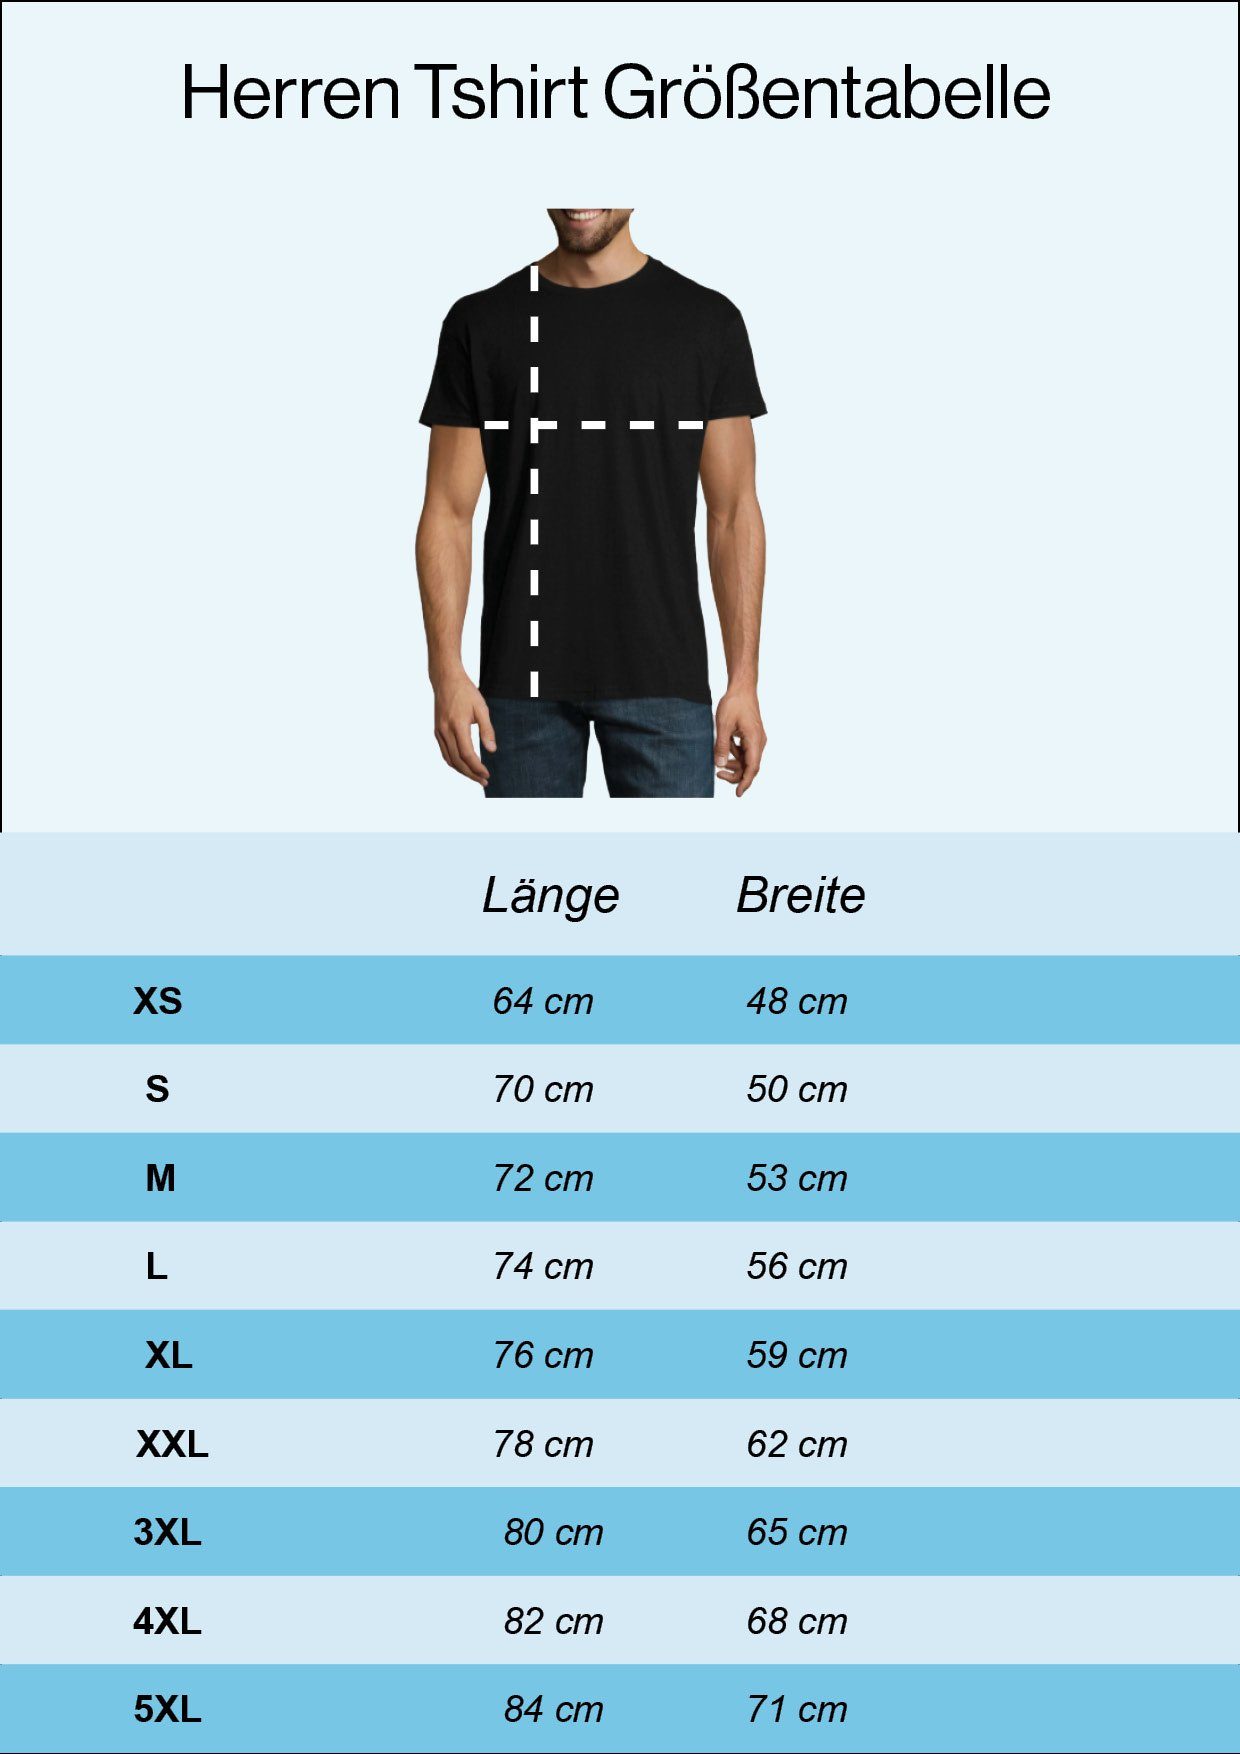 Schädel mit Youth Herren Frontprint UK T-Shirt Logo Designz England Navyblau Totenkopf trendigem Shirt